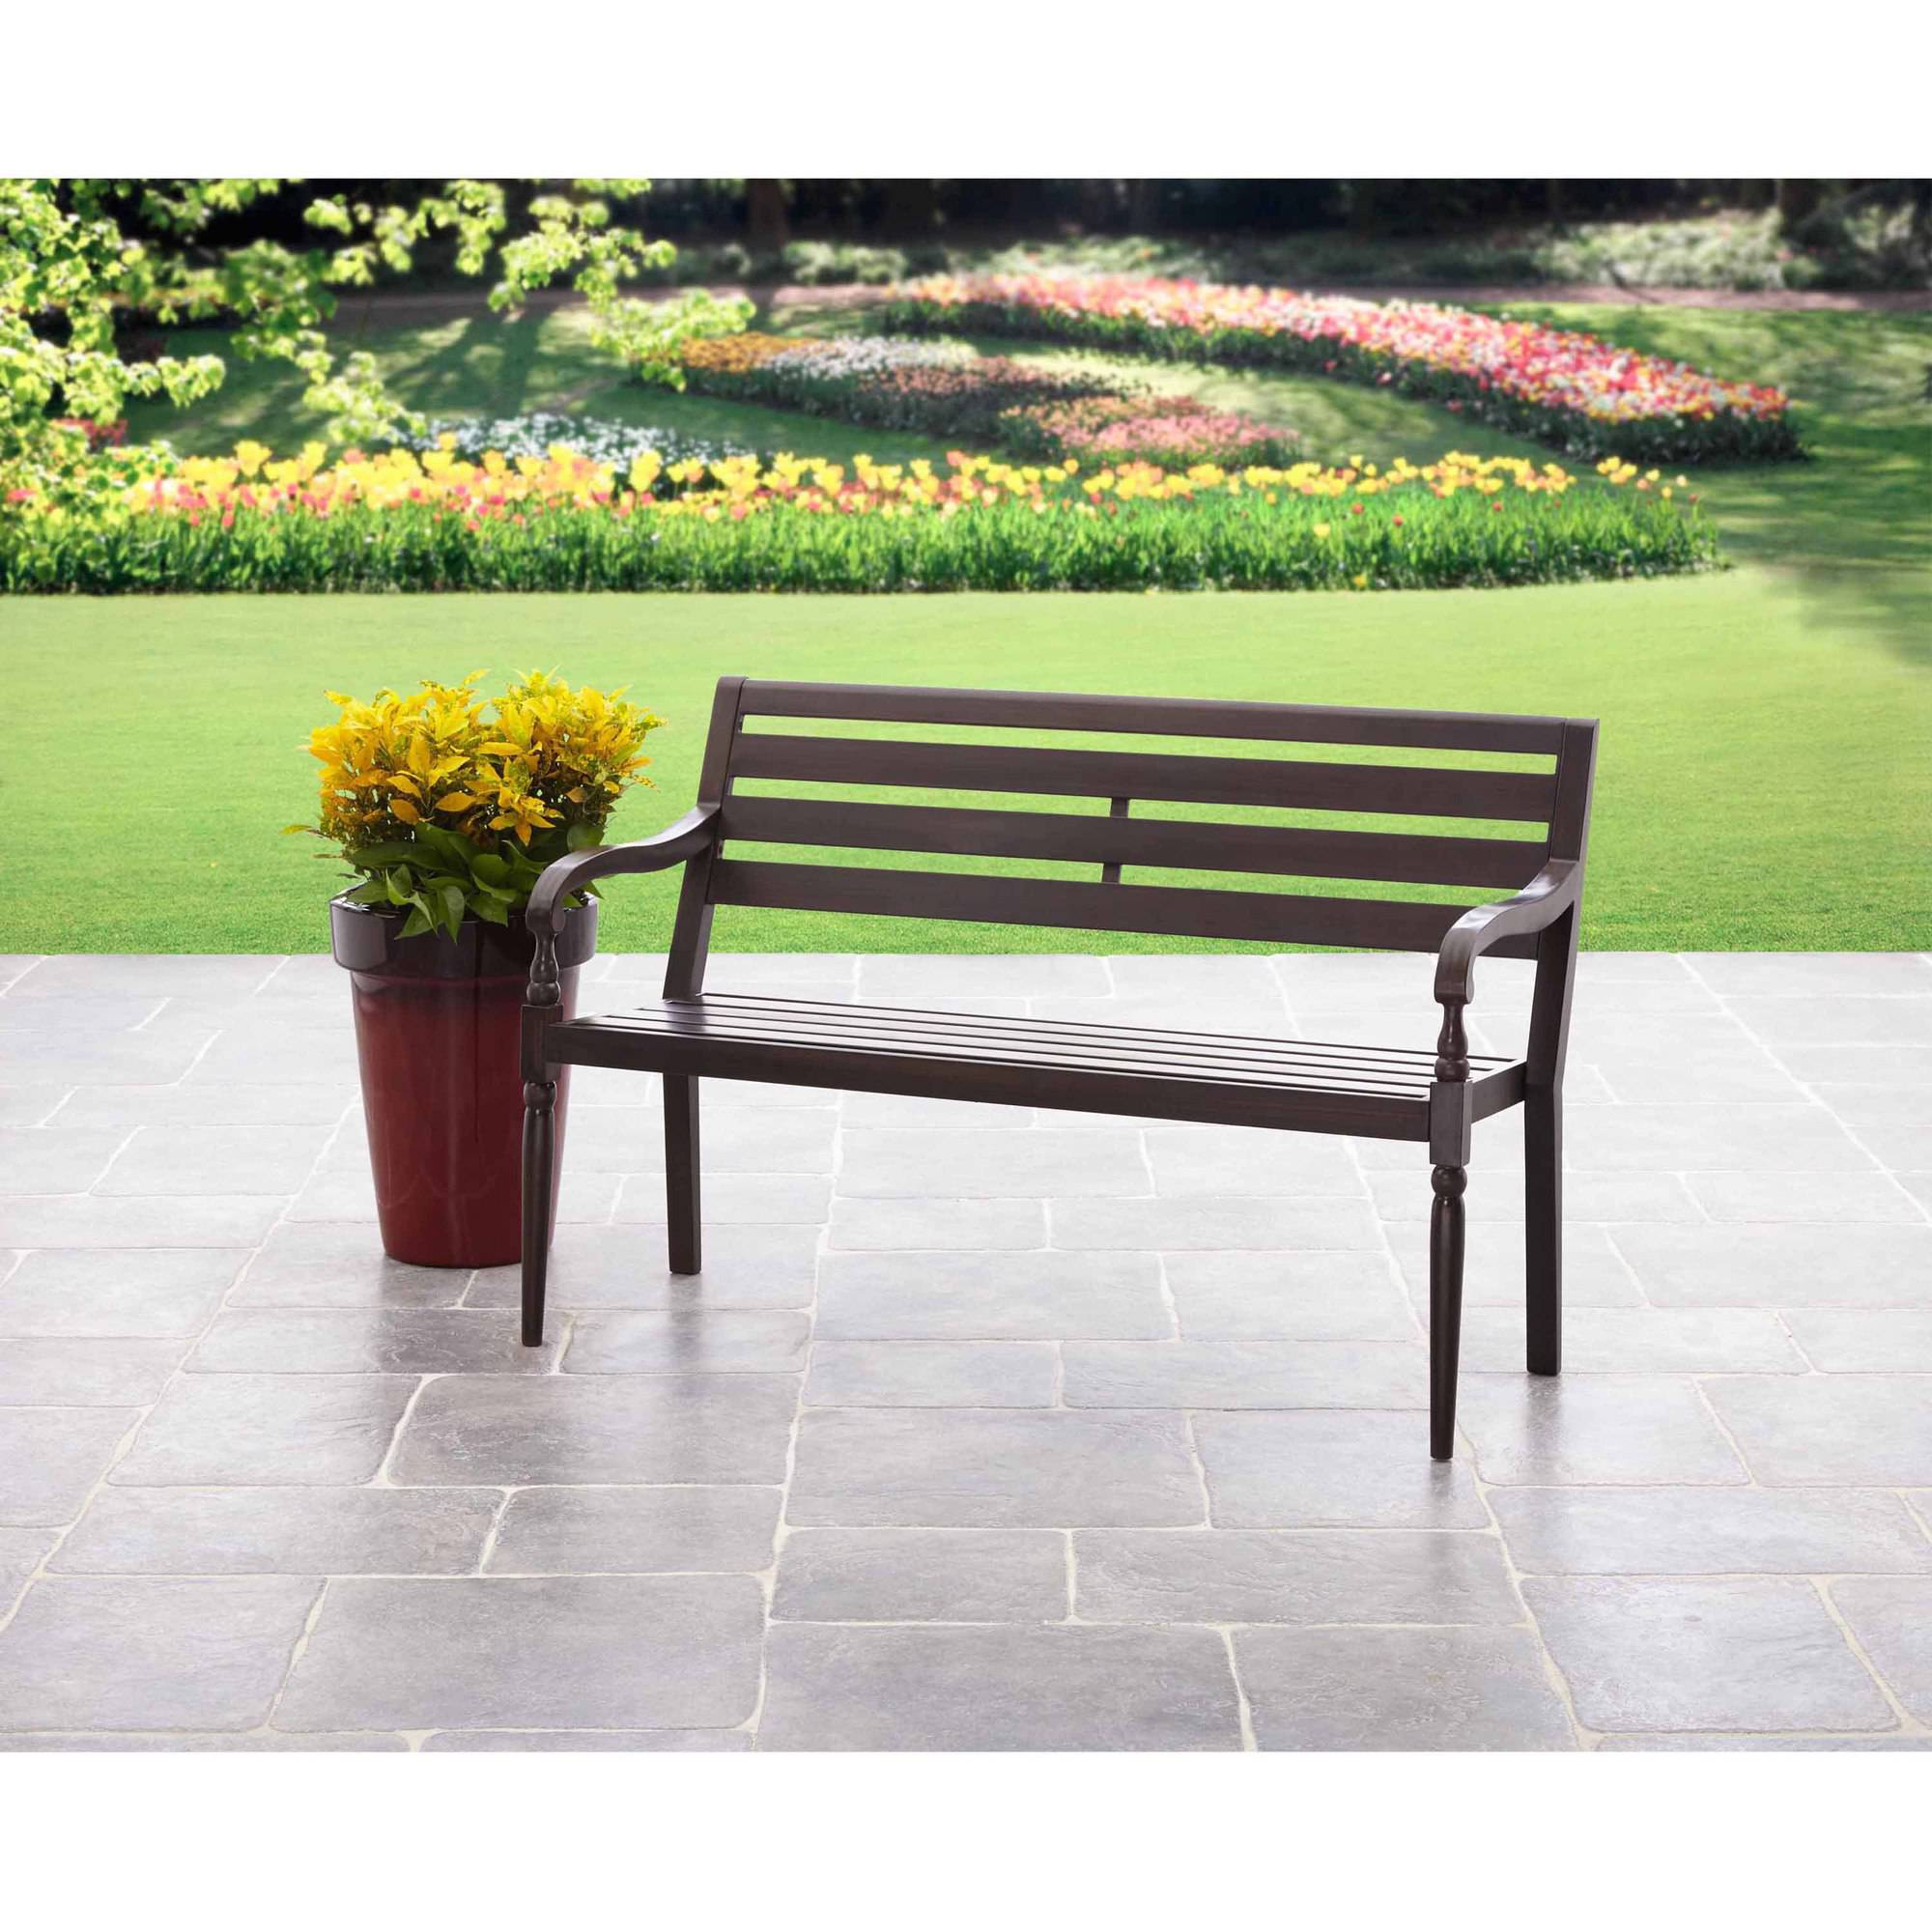 garden seat mainstays slat outdoor garden bench, black - walmart.com RLTZTFL